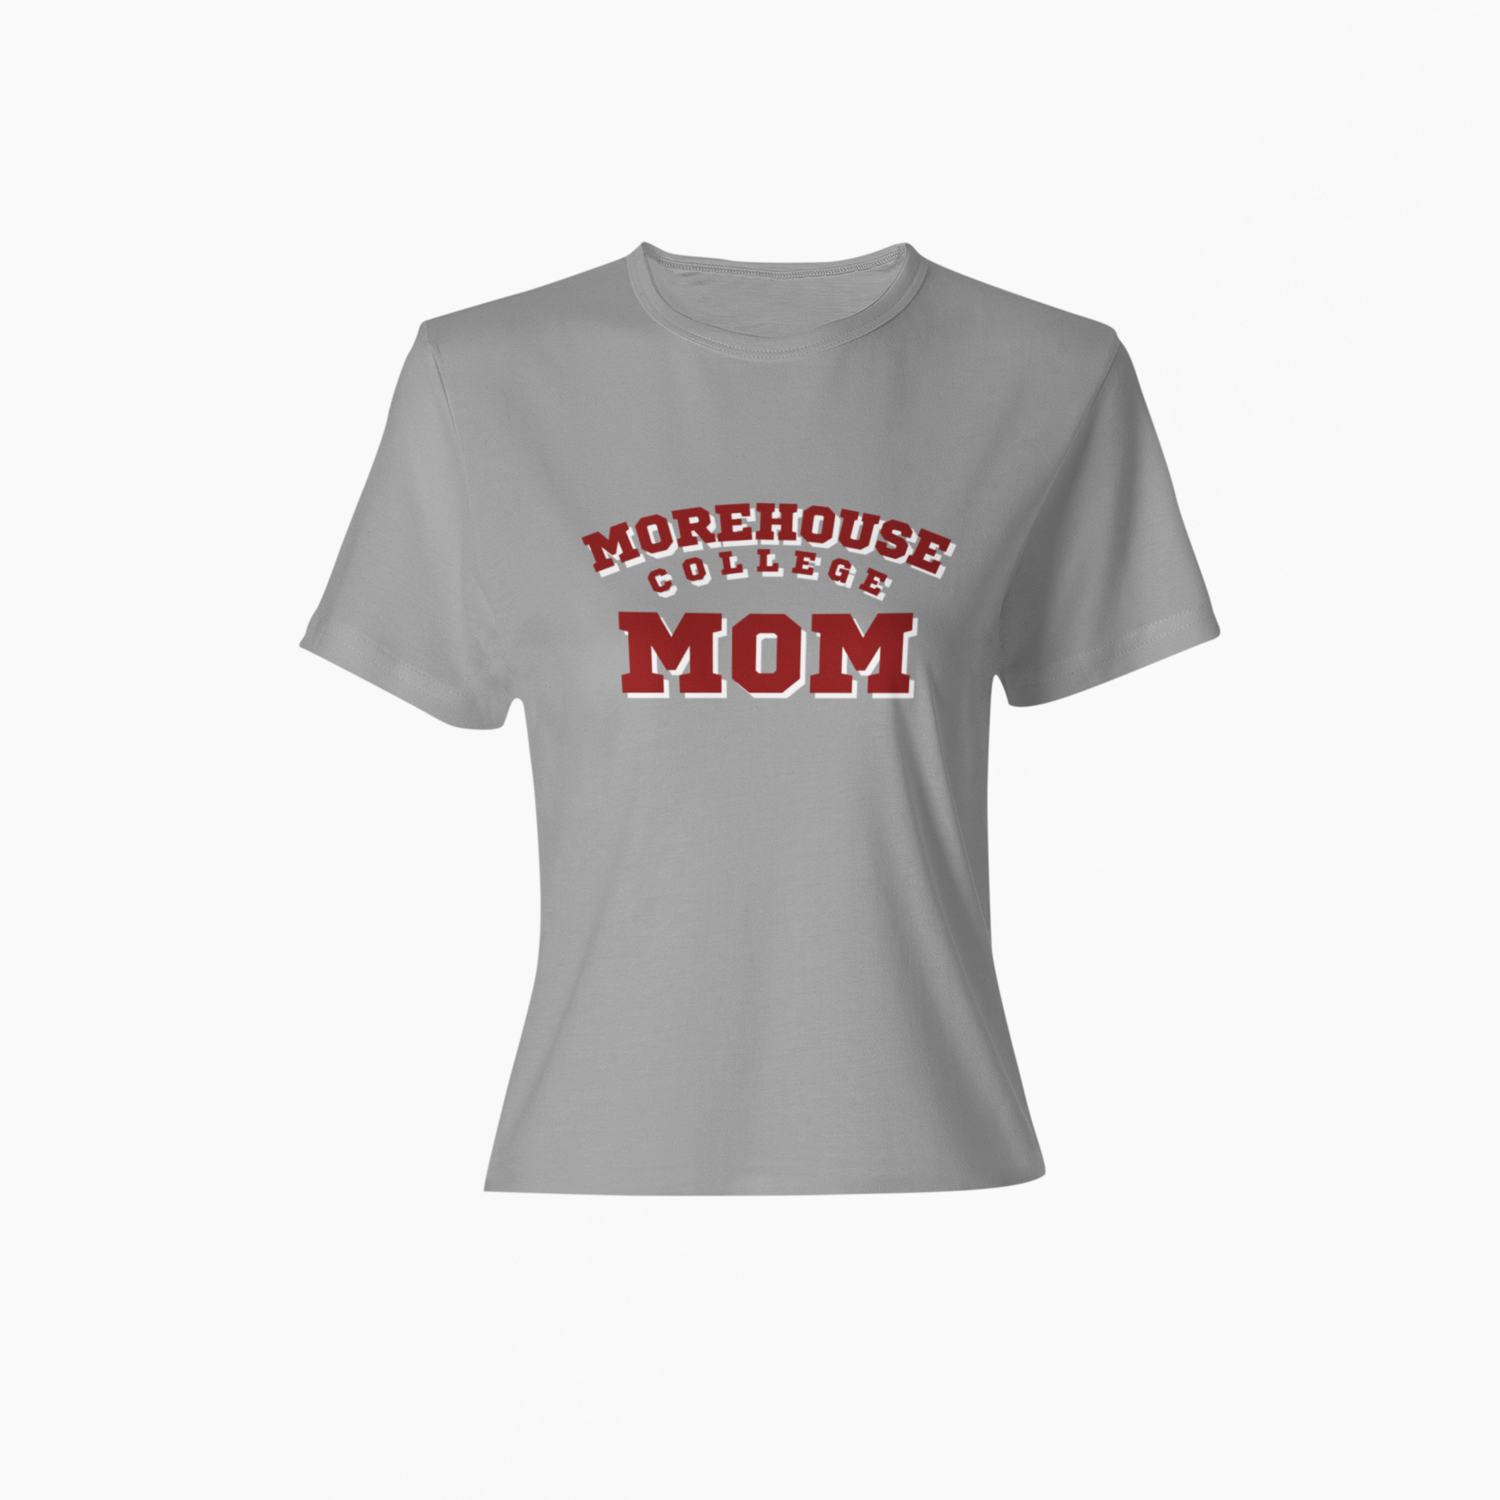 Afflatus Morehouse Mom Short Sleeve Tee